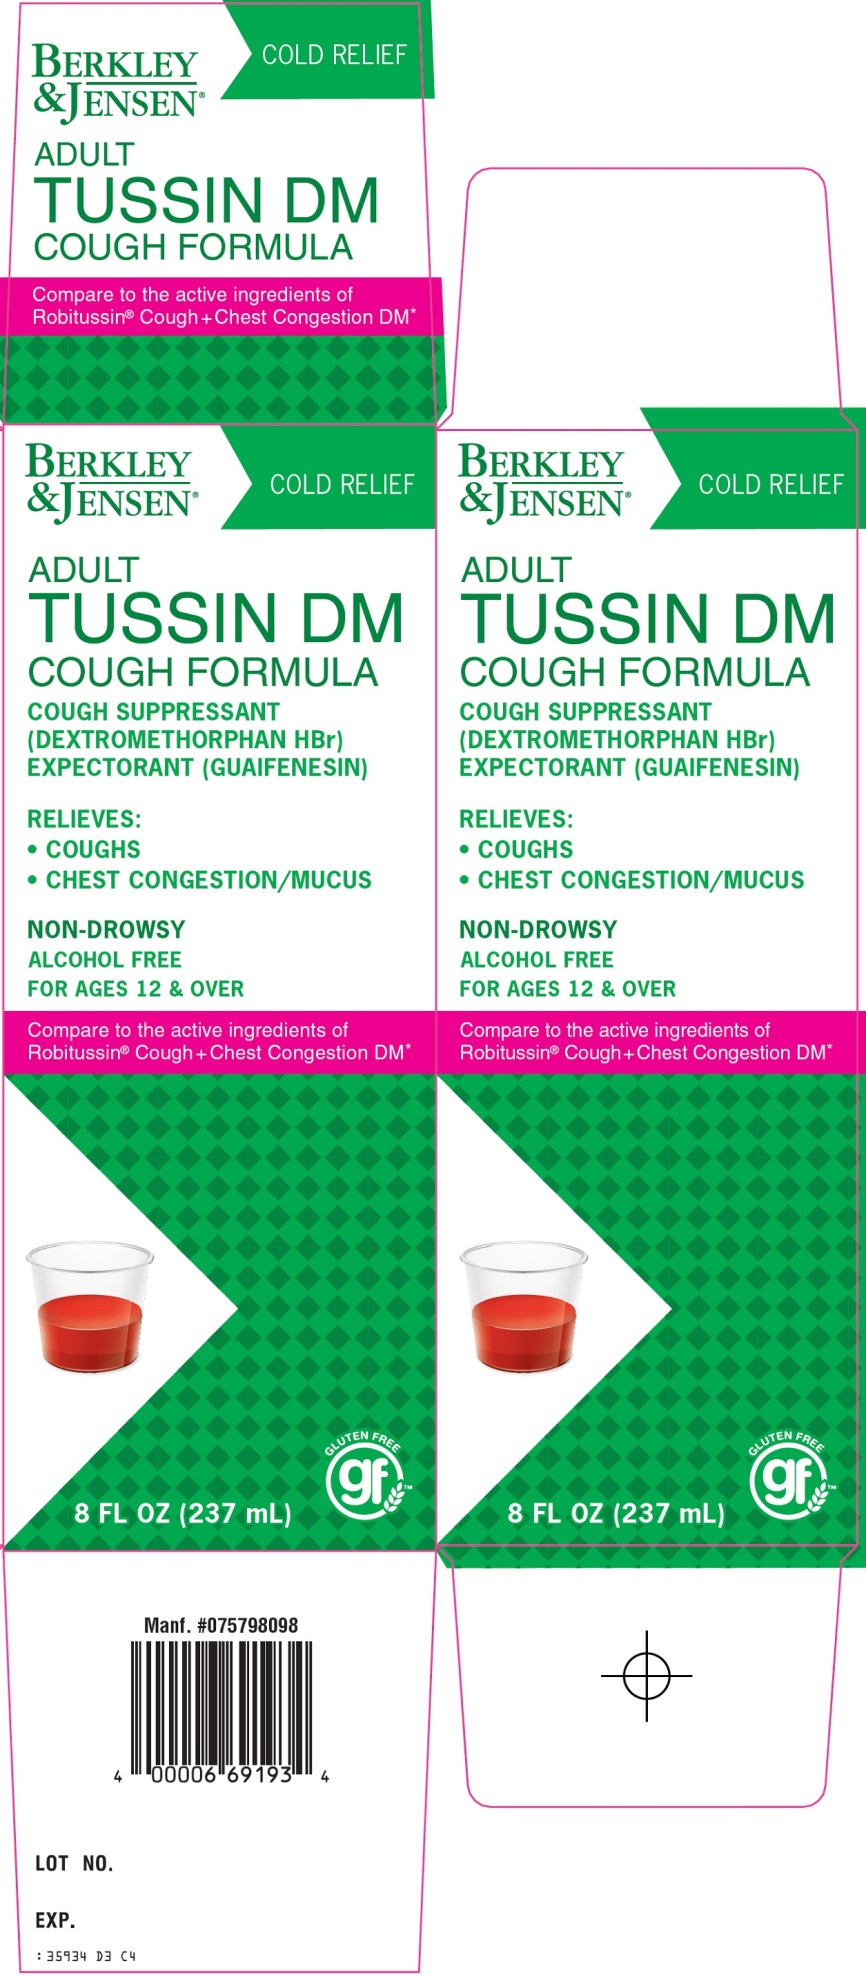 Adult Tussin DM Carton Image 1